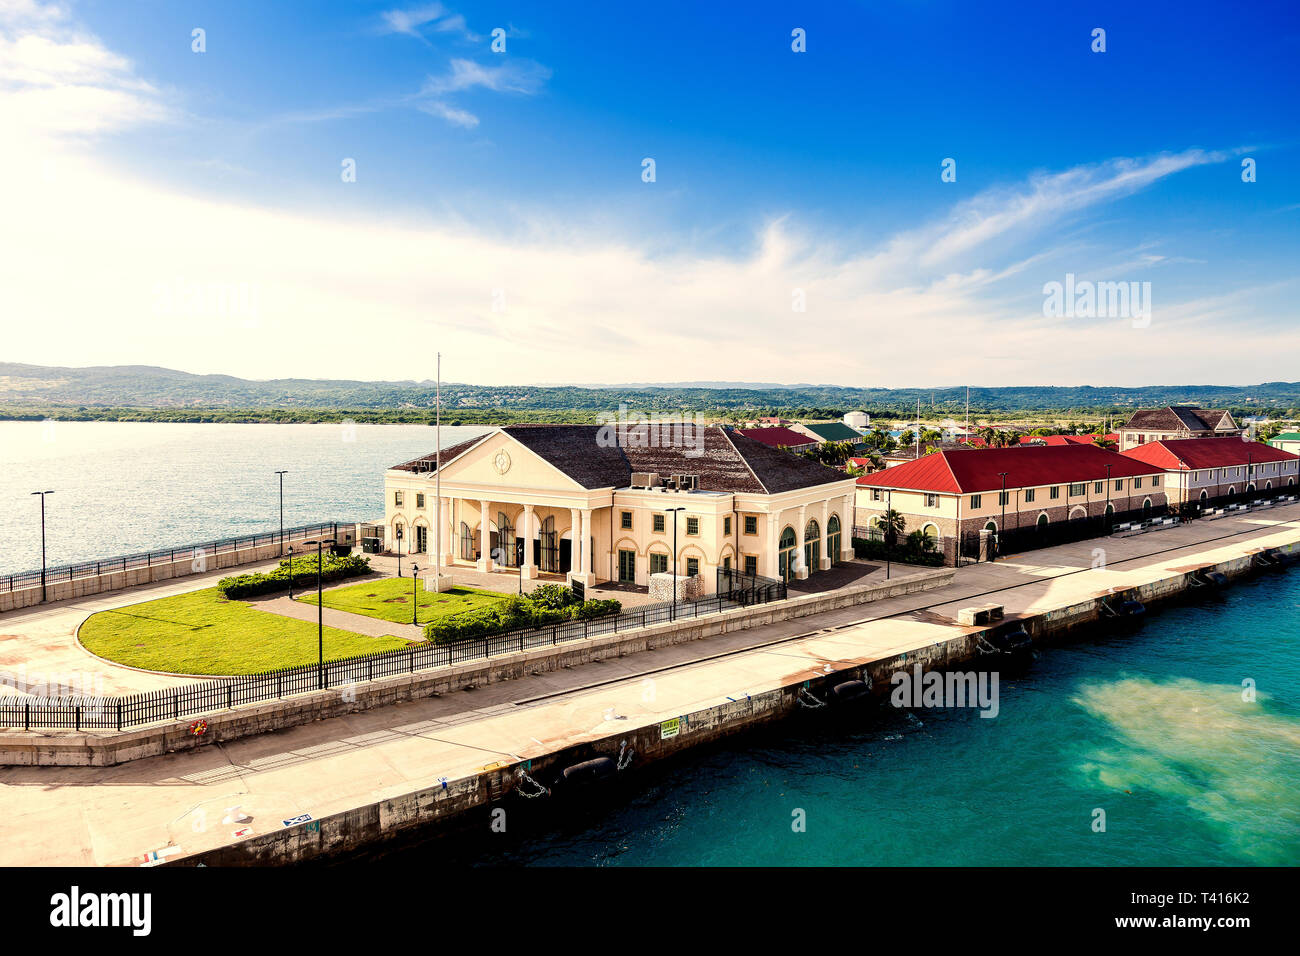 Die Cruise Port in Falmouth - Jamaika Stockfoto